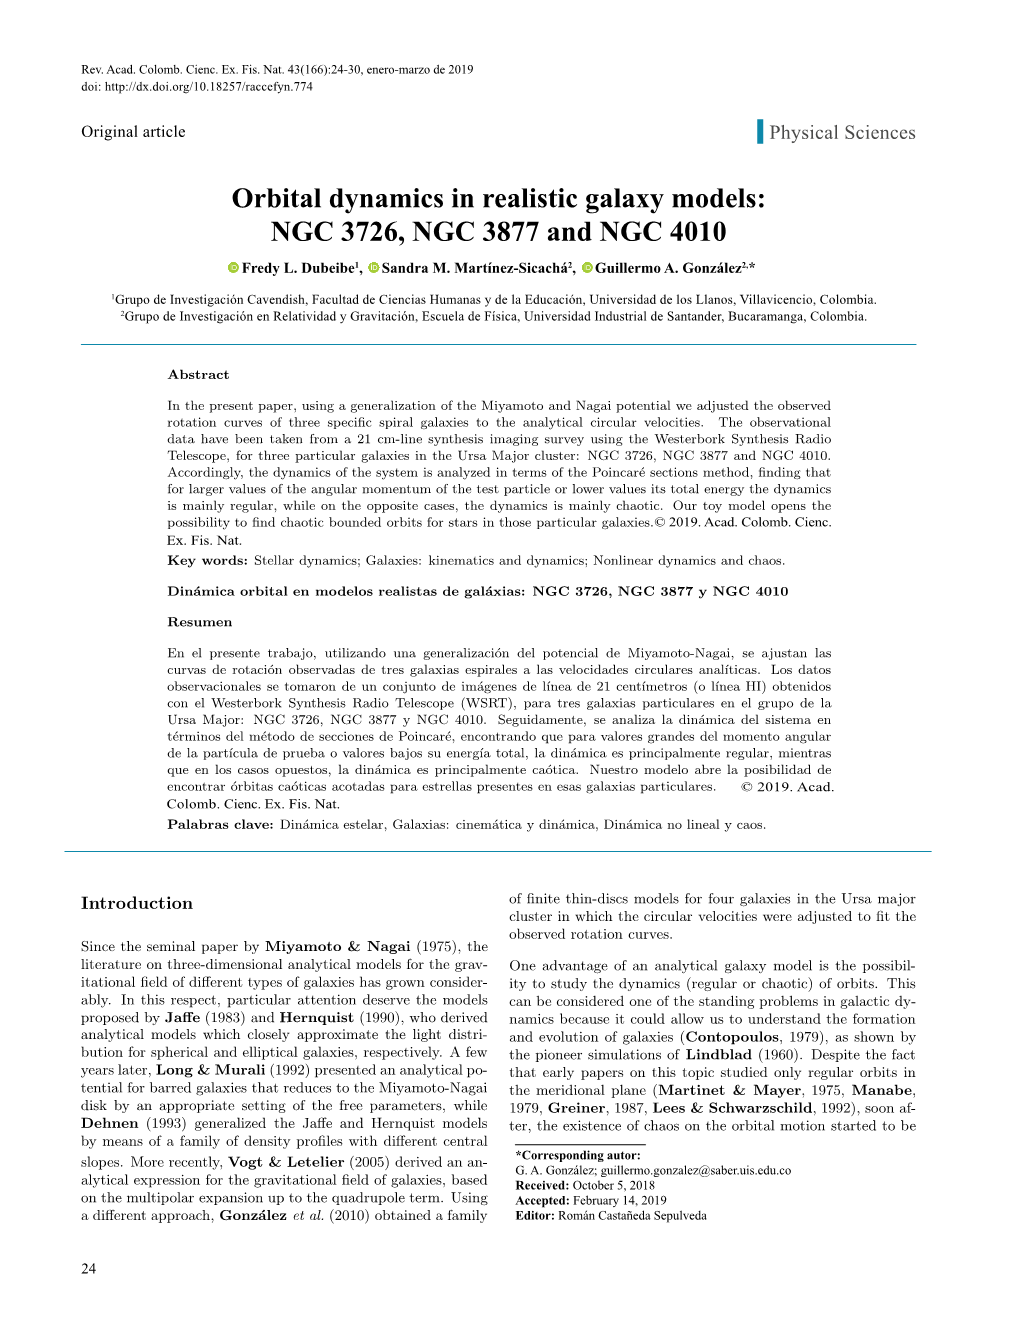 Orbital Dynamics in Realistic Galaxy Models